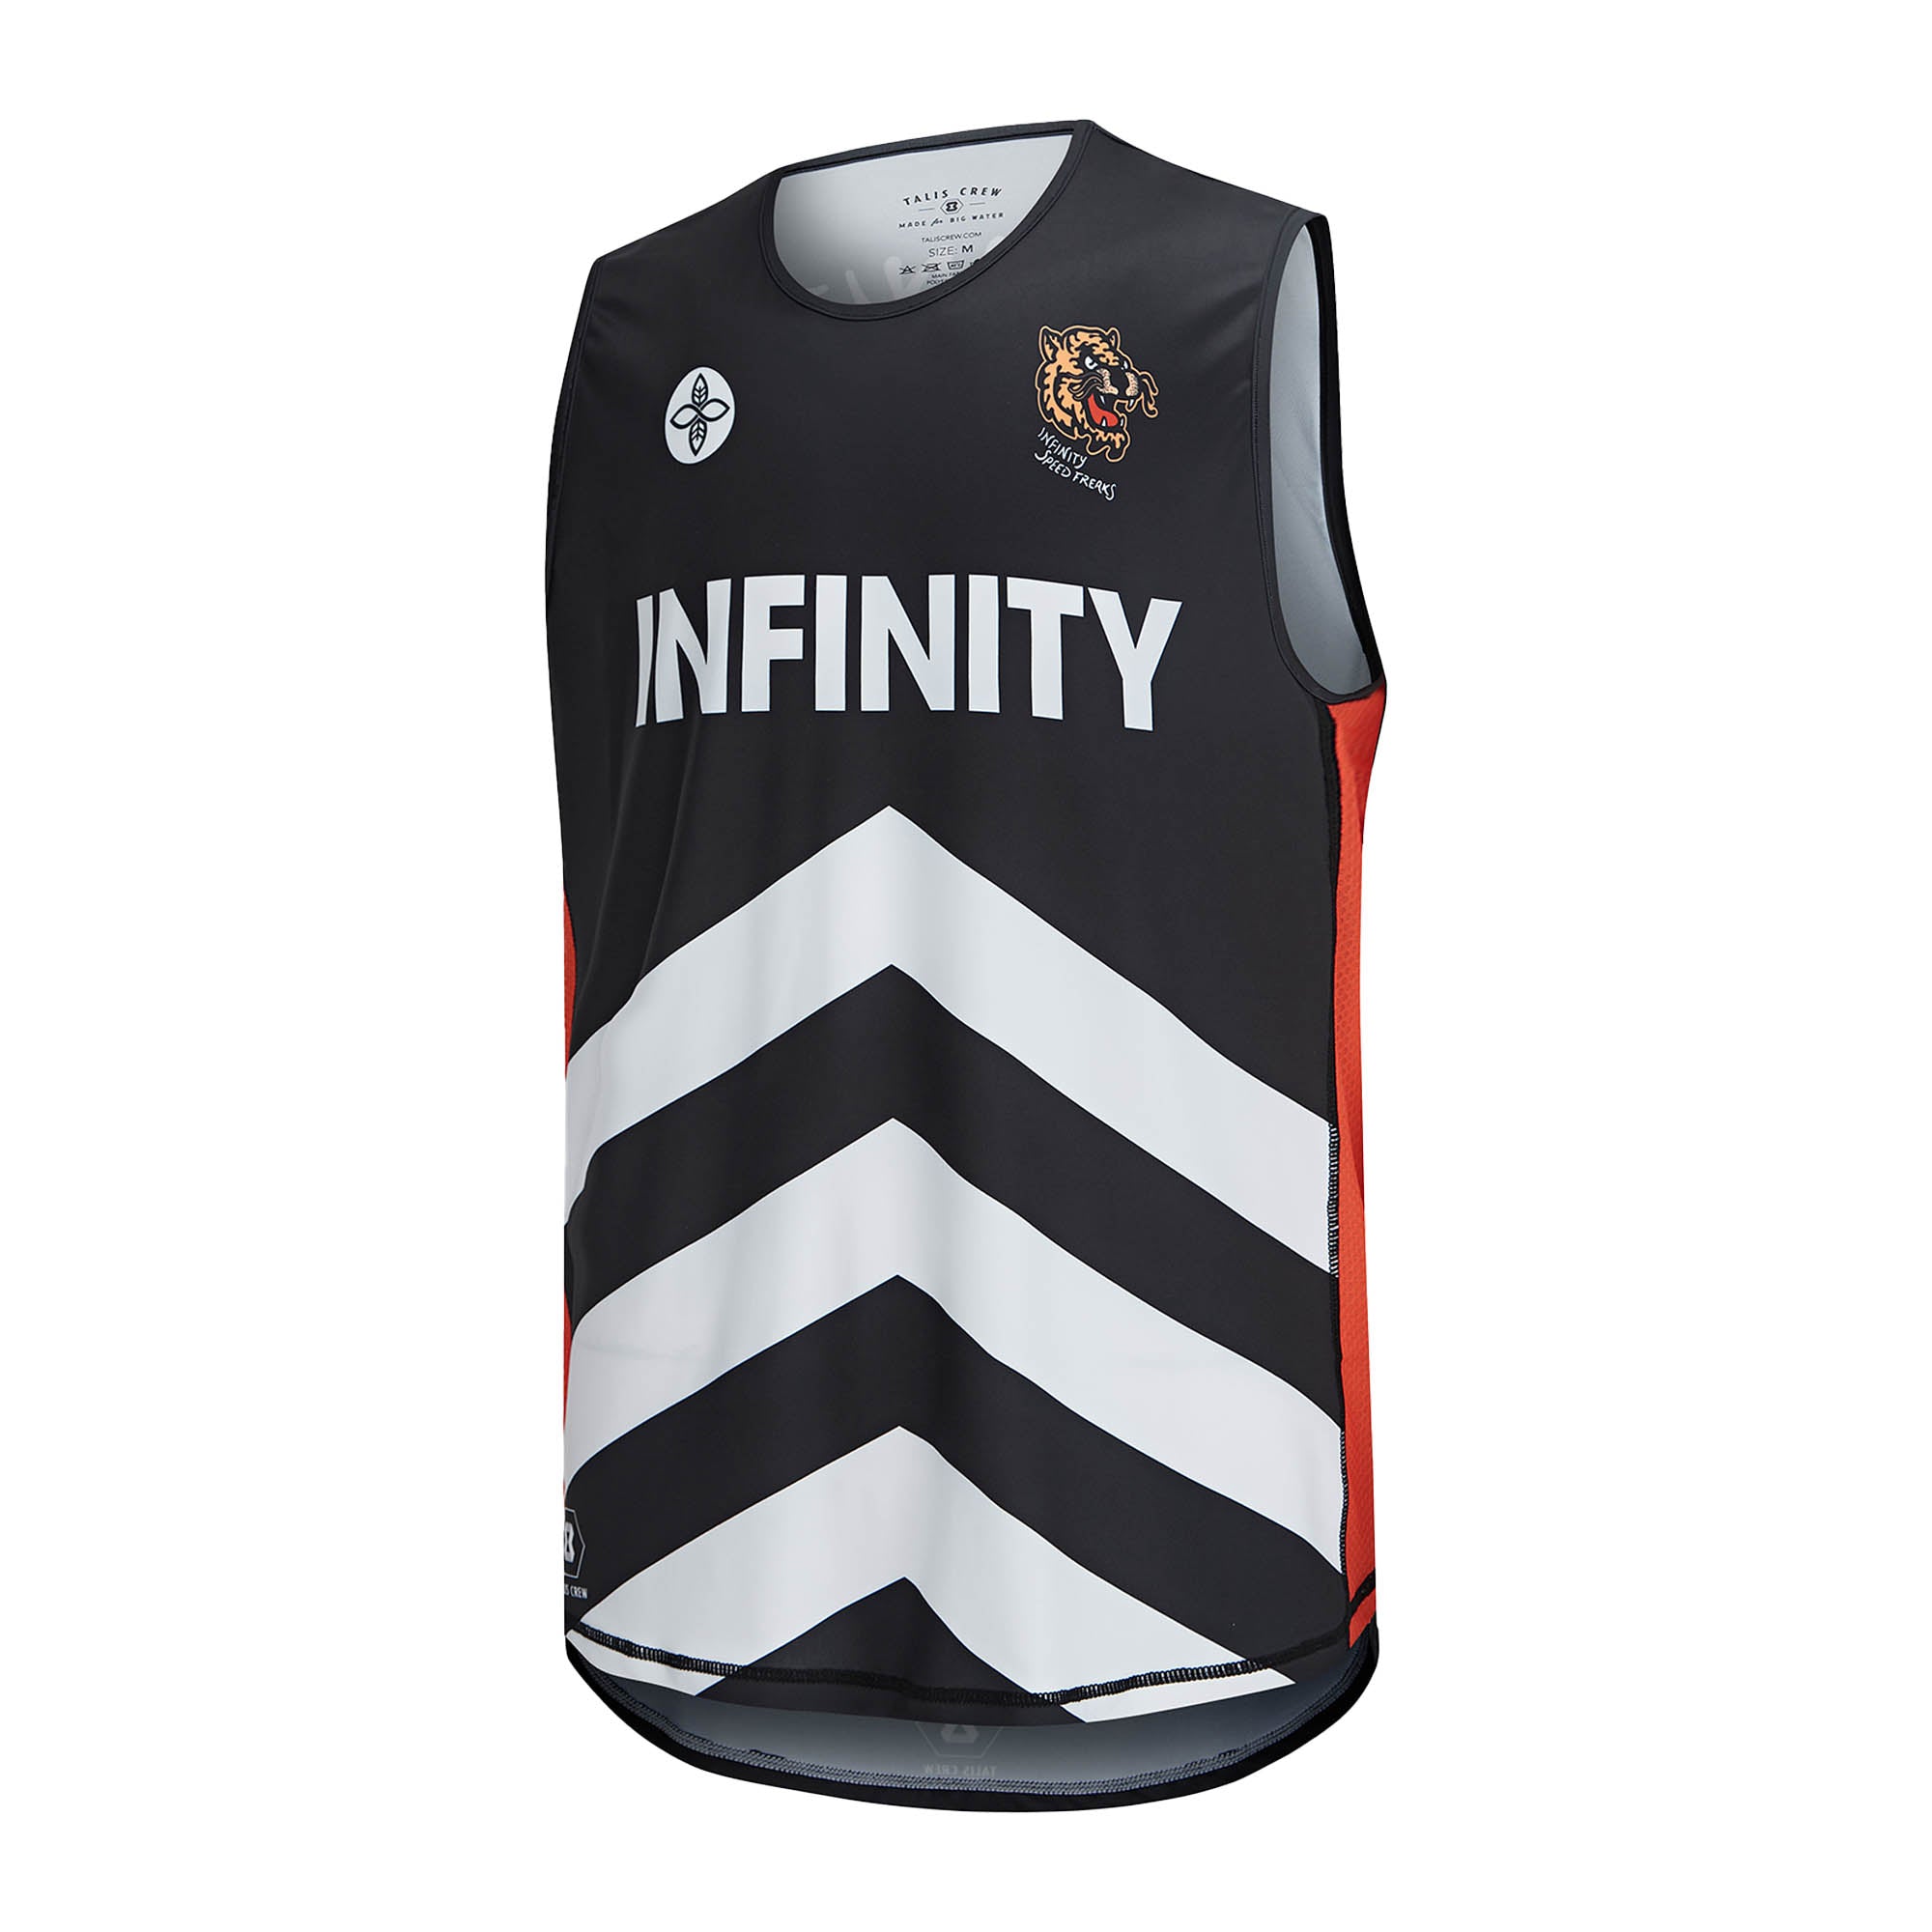 infinity jersey